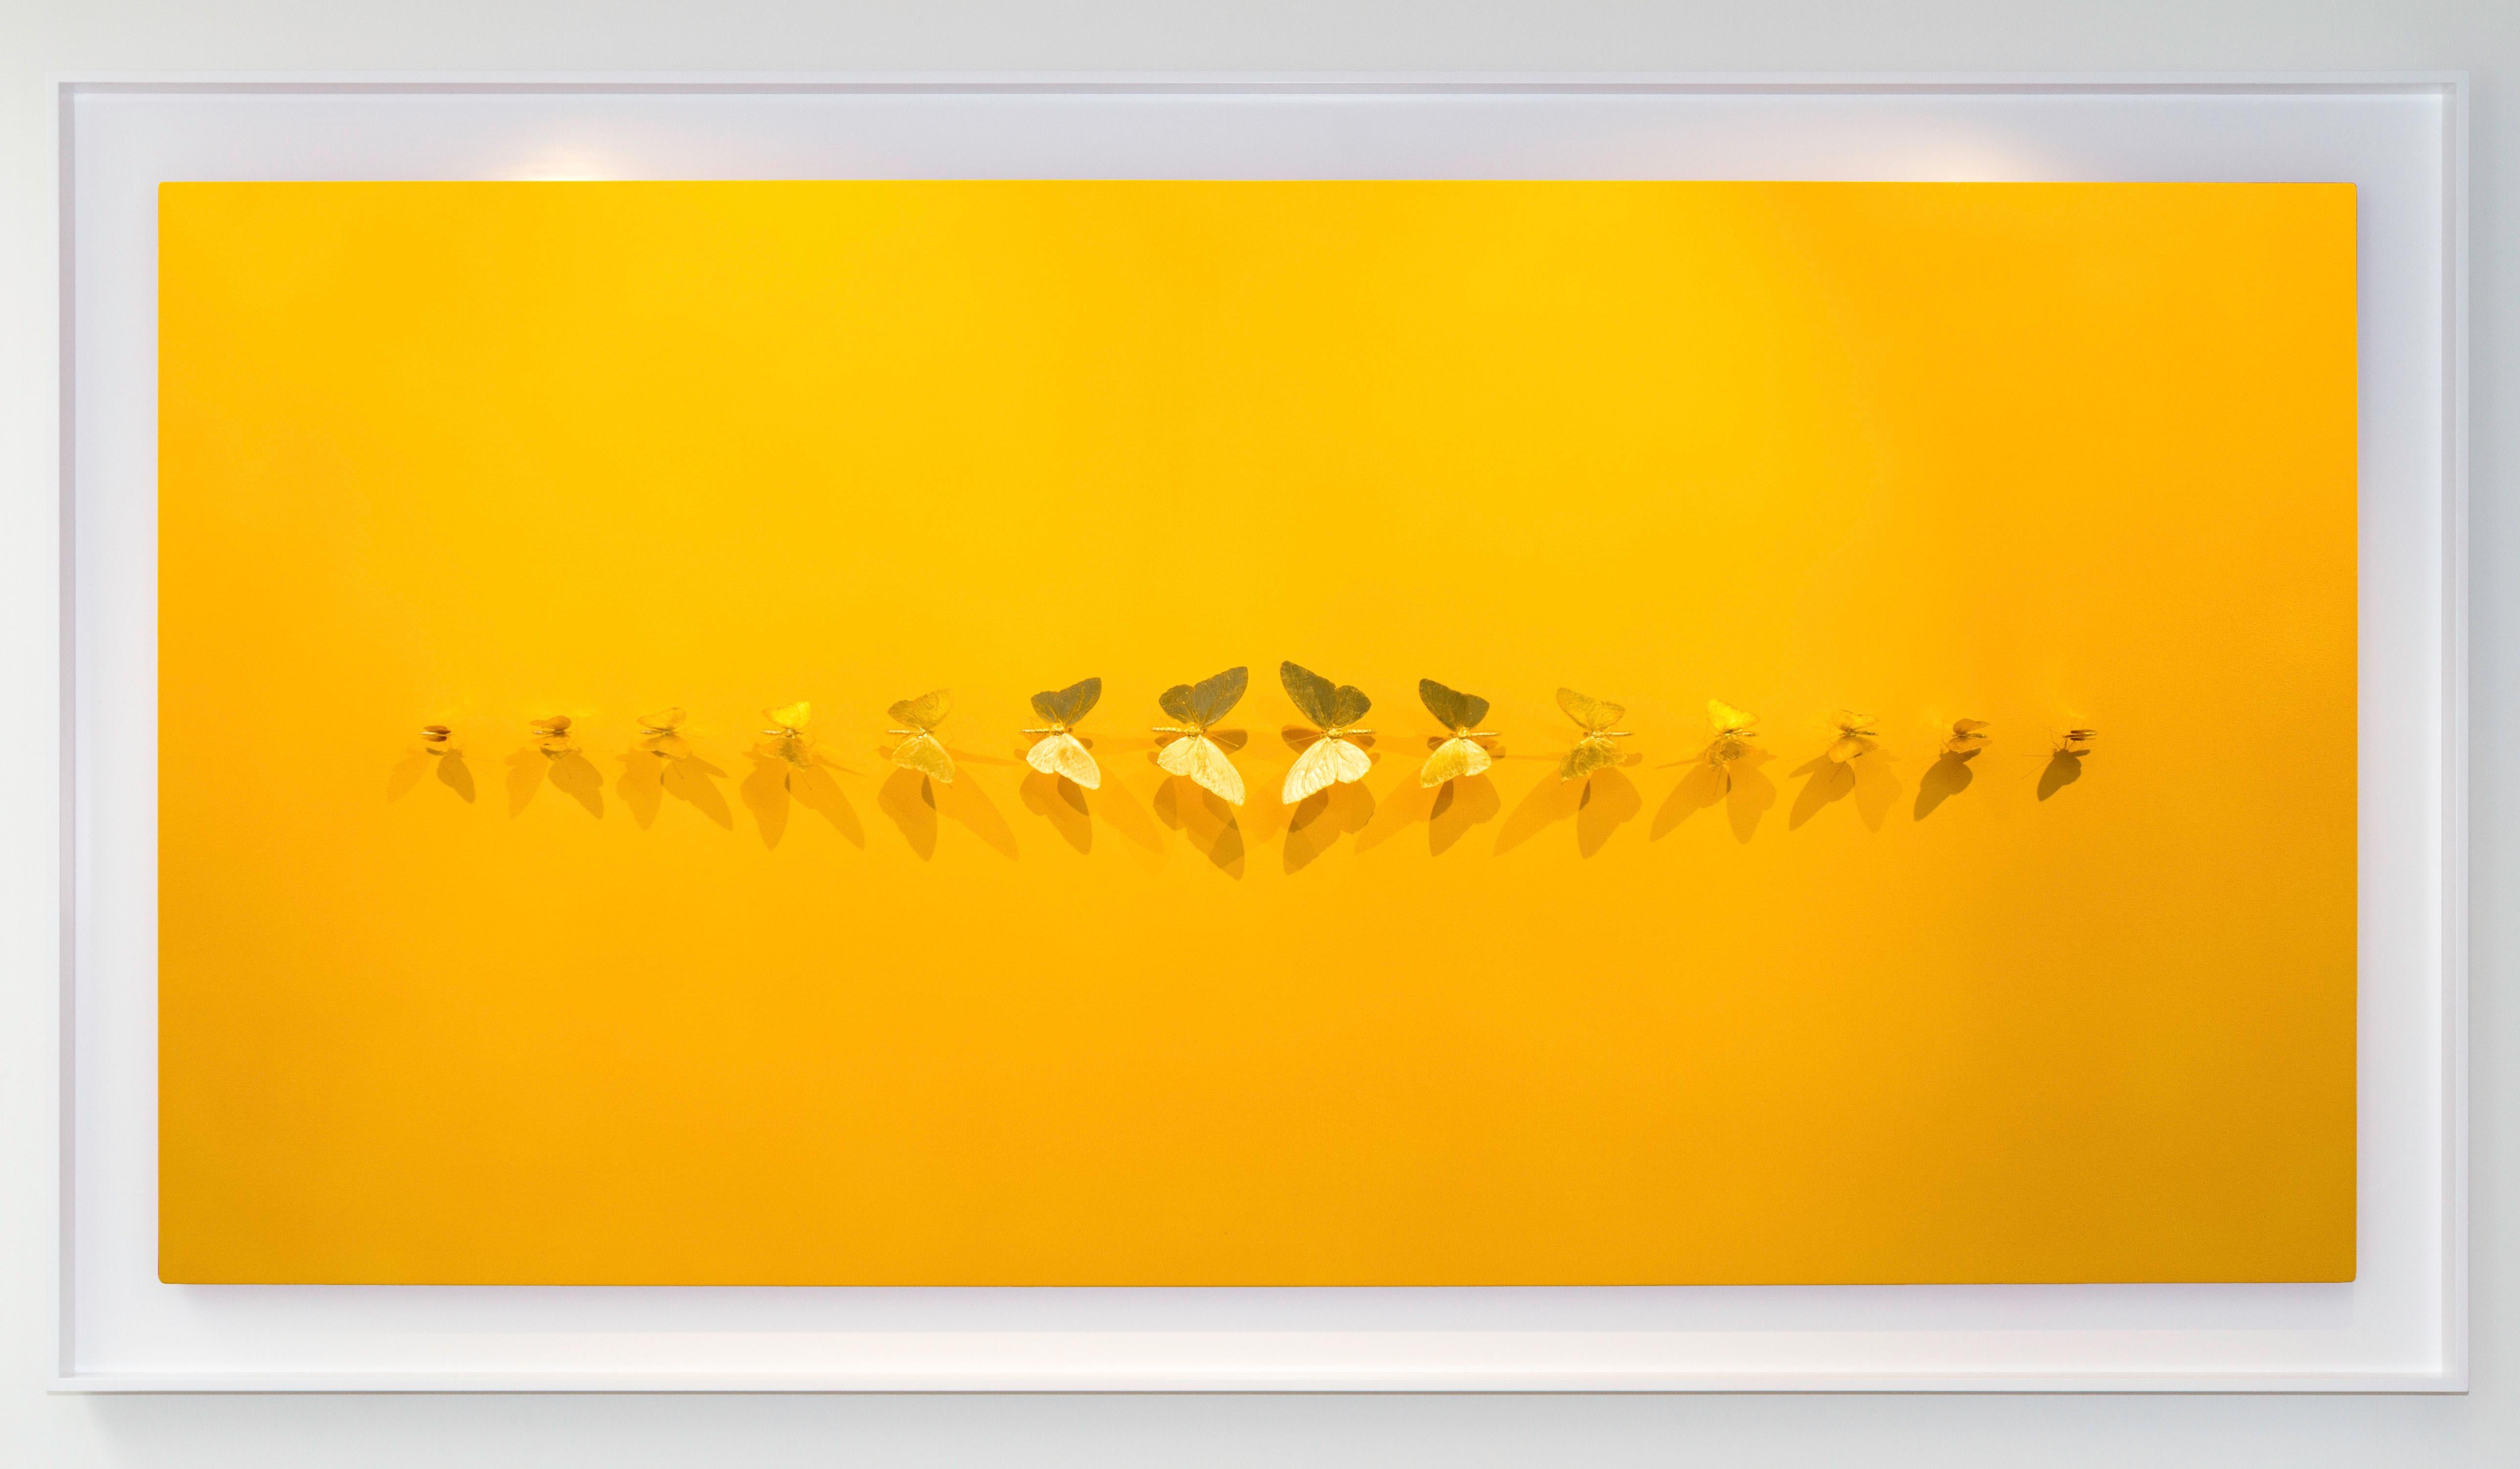 Samuel Dejong Figurative Painting - Metamorphosis Yellow - 21st Century, Contemporary Figurative, Golden Butterflies